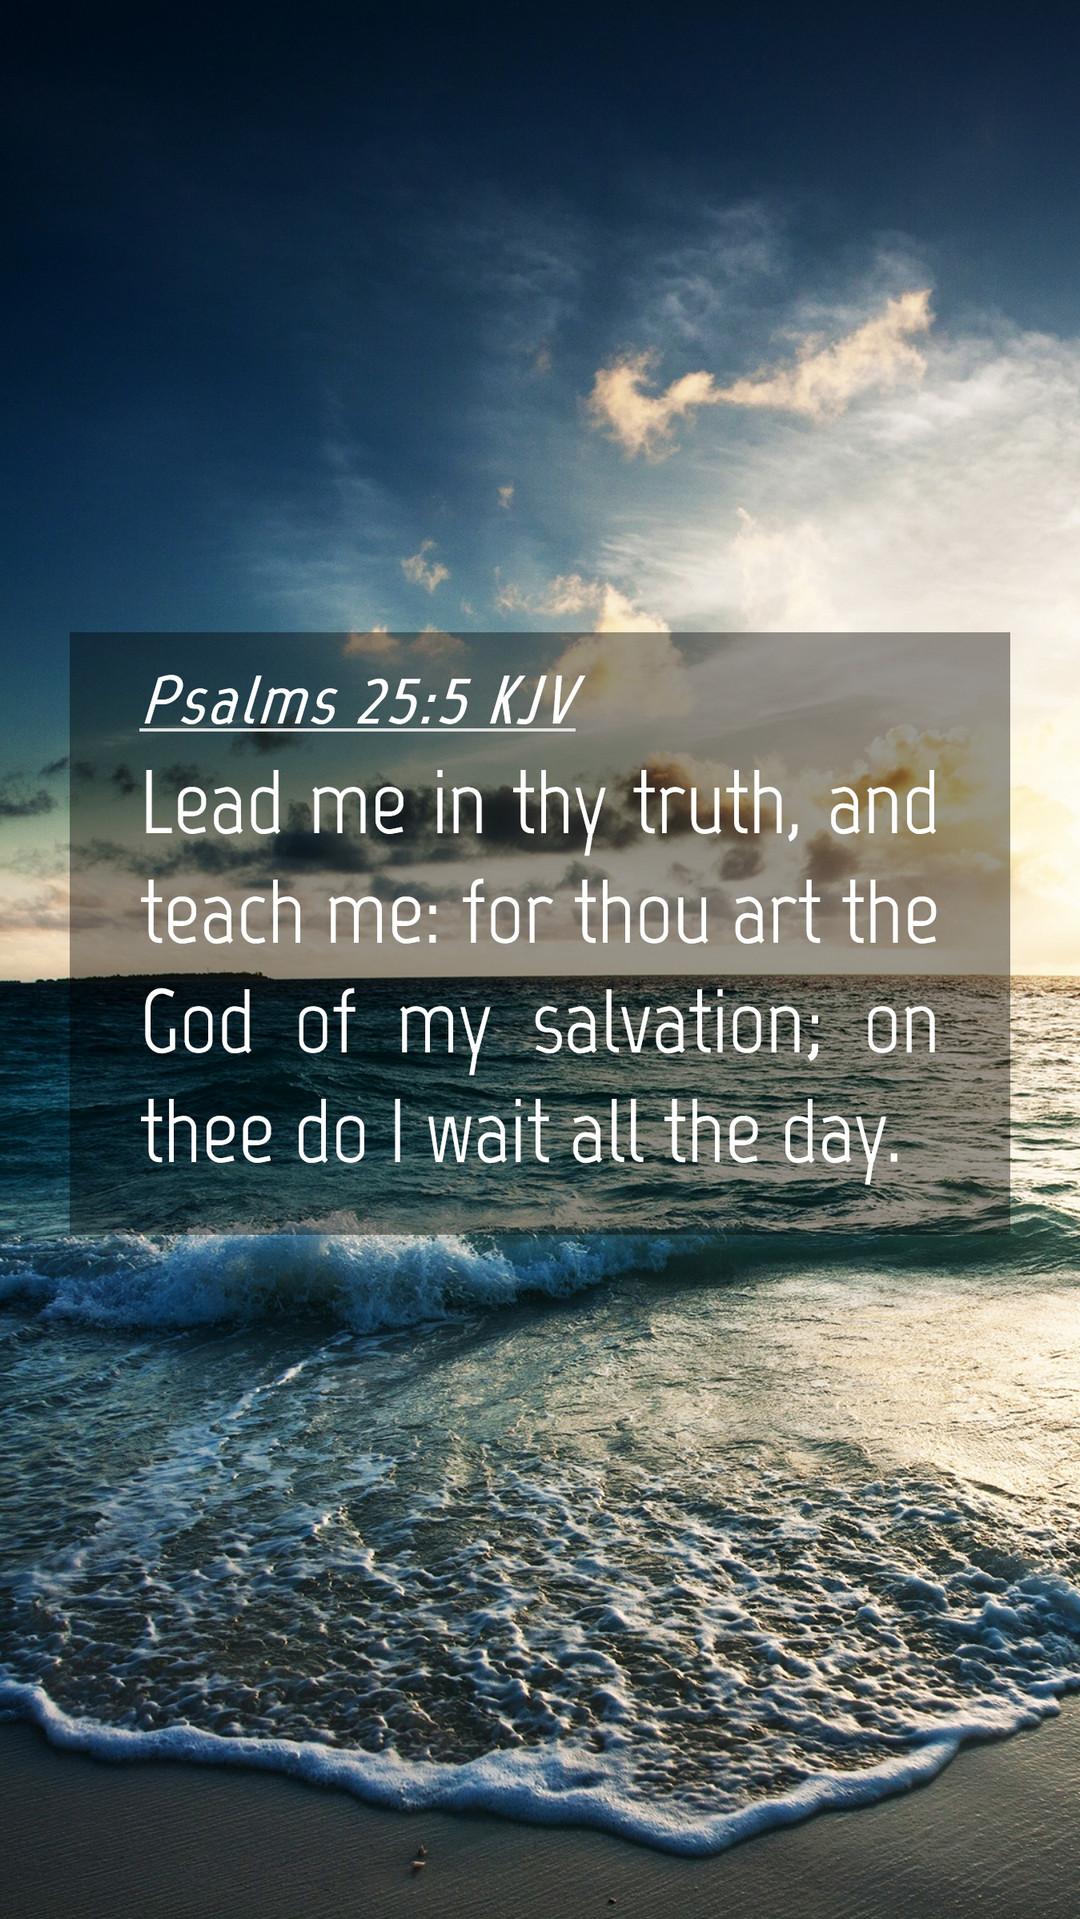 Psalms 255 KJV Mobile Phone Wallpaper   Lead me in thy truth and